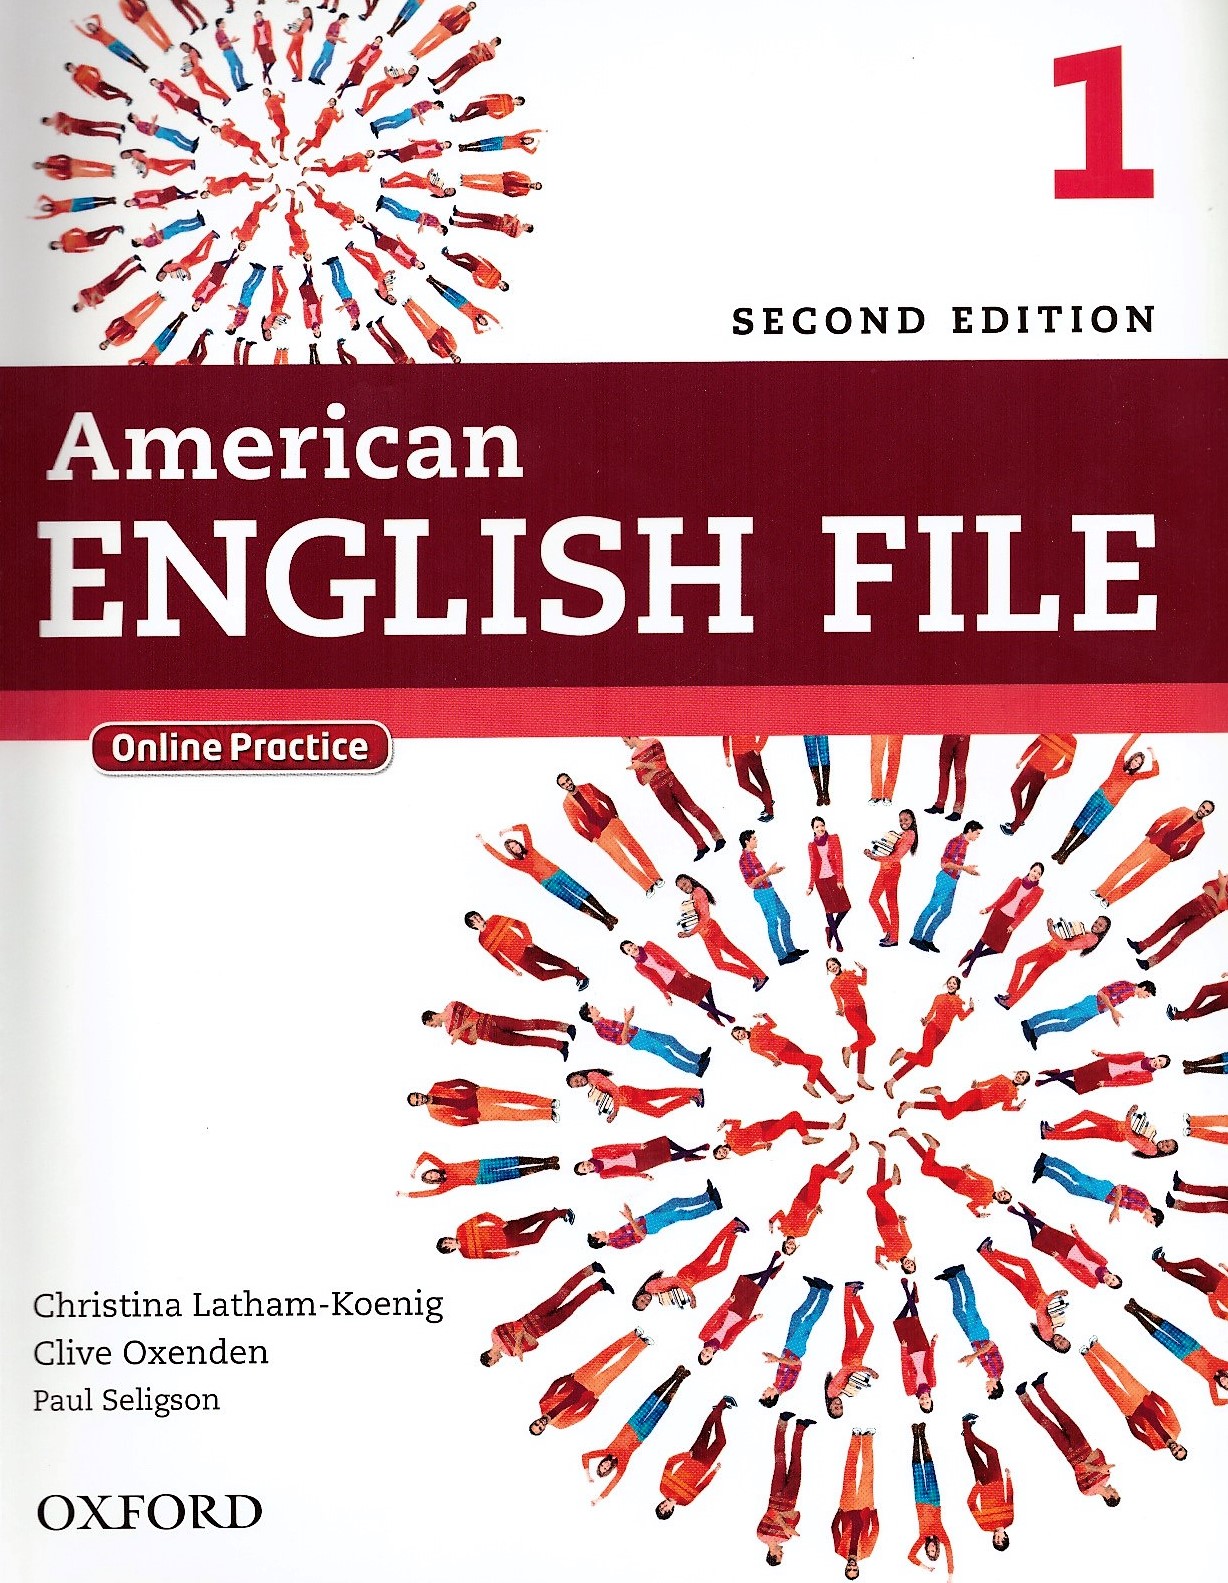 American English File (Second Edition) 1 Student's Book + Online Practice / Учебник